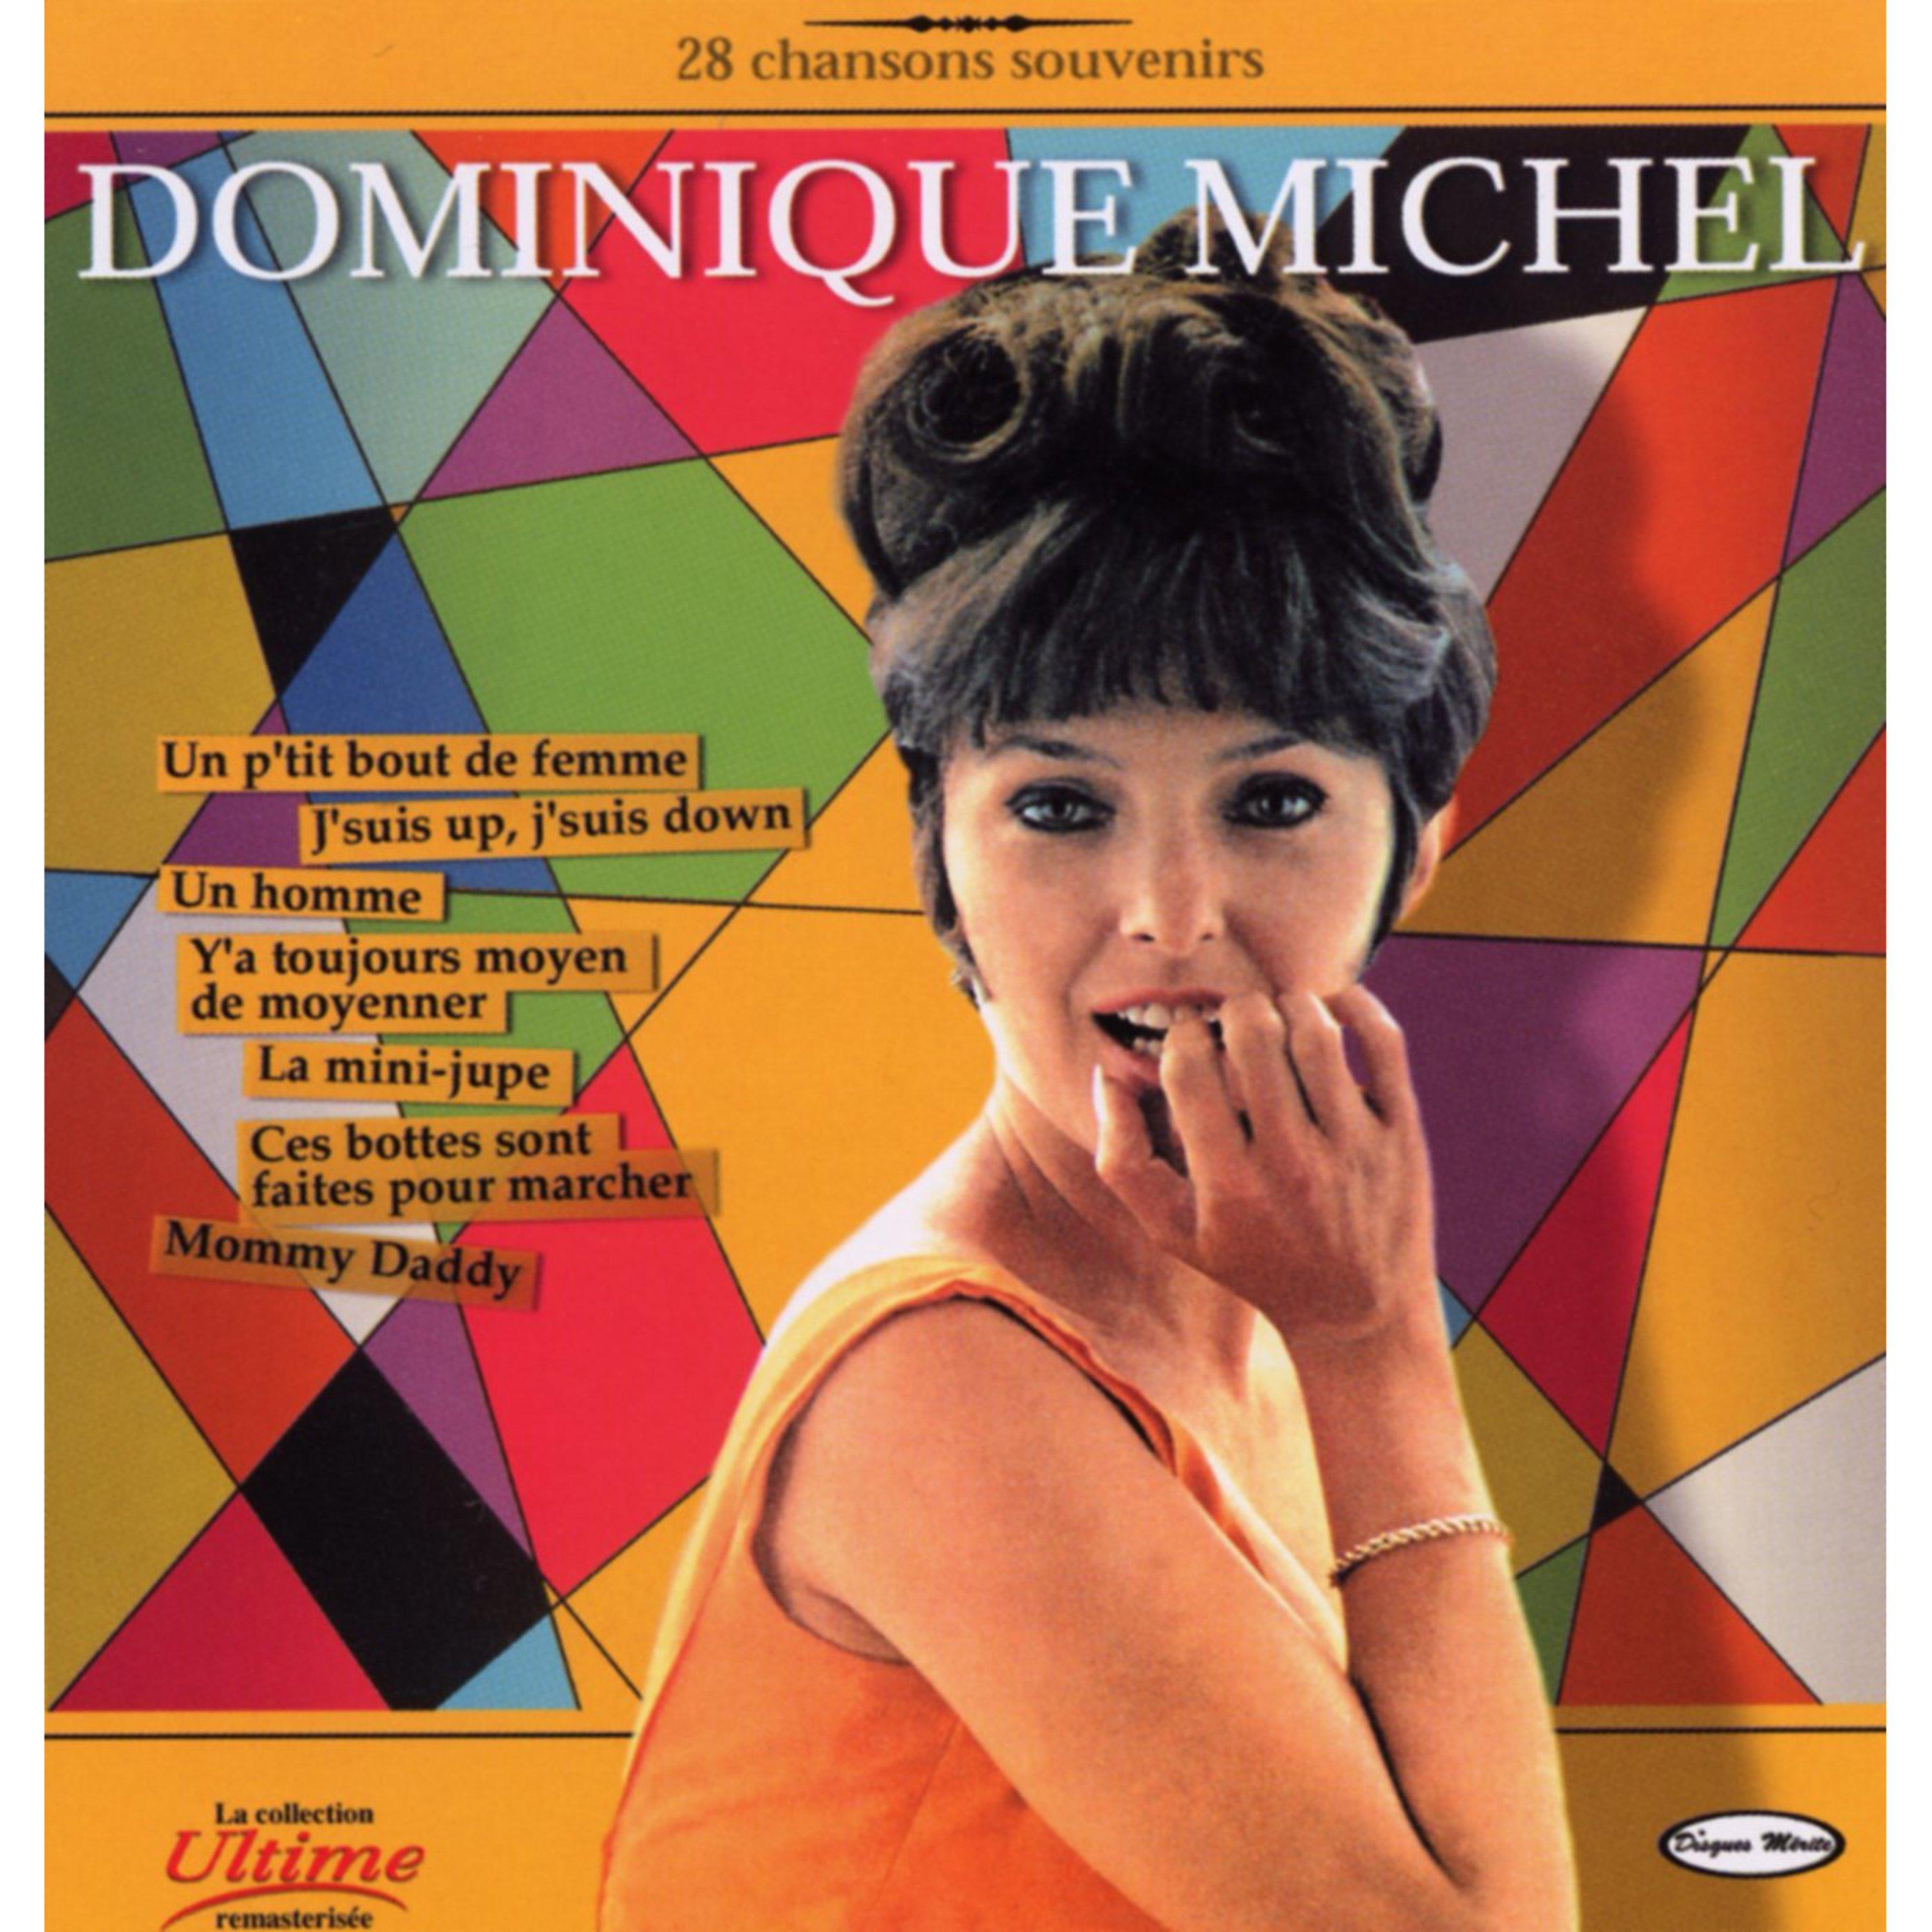 Dominique Michel - Y'a toujours moyen de moyenner (with Willie Lamothe)